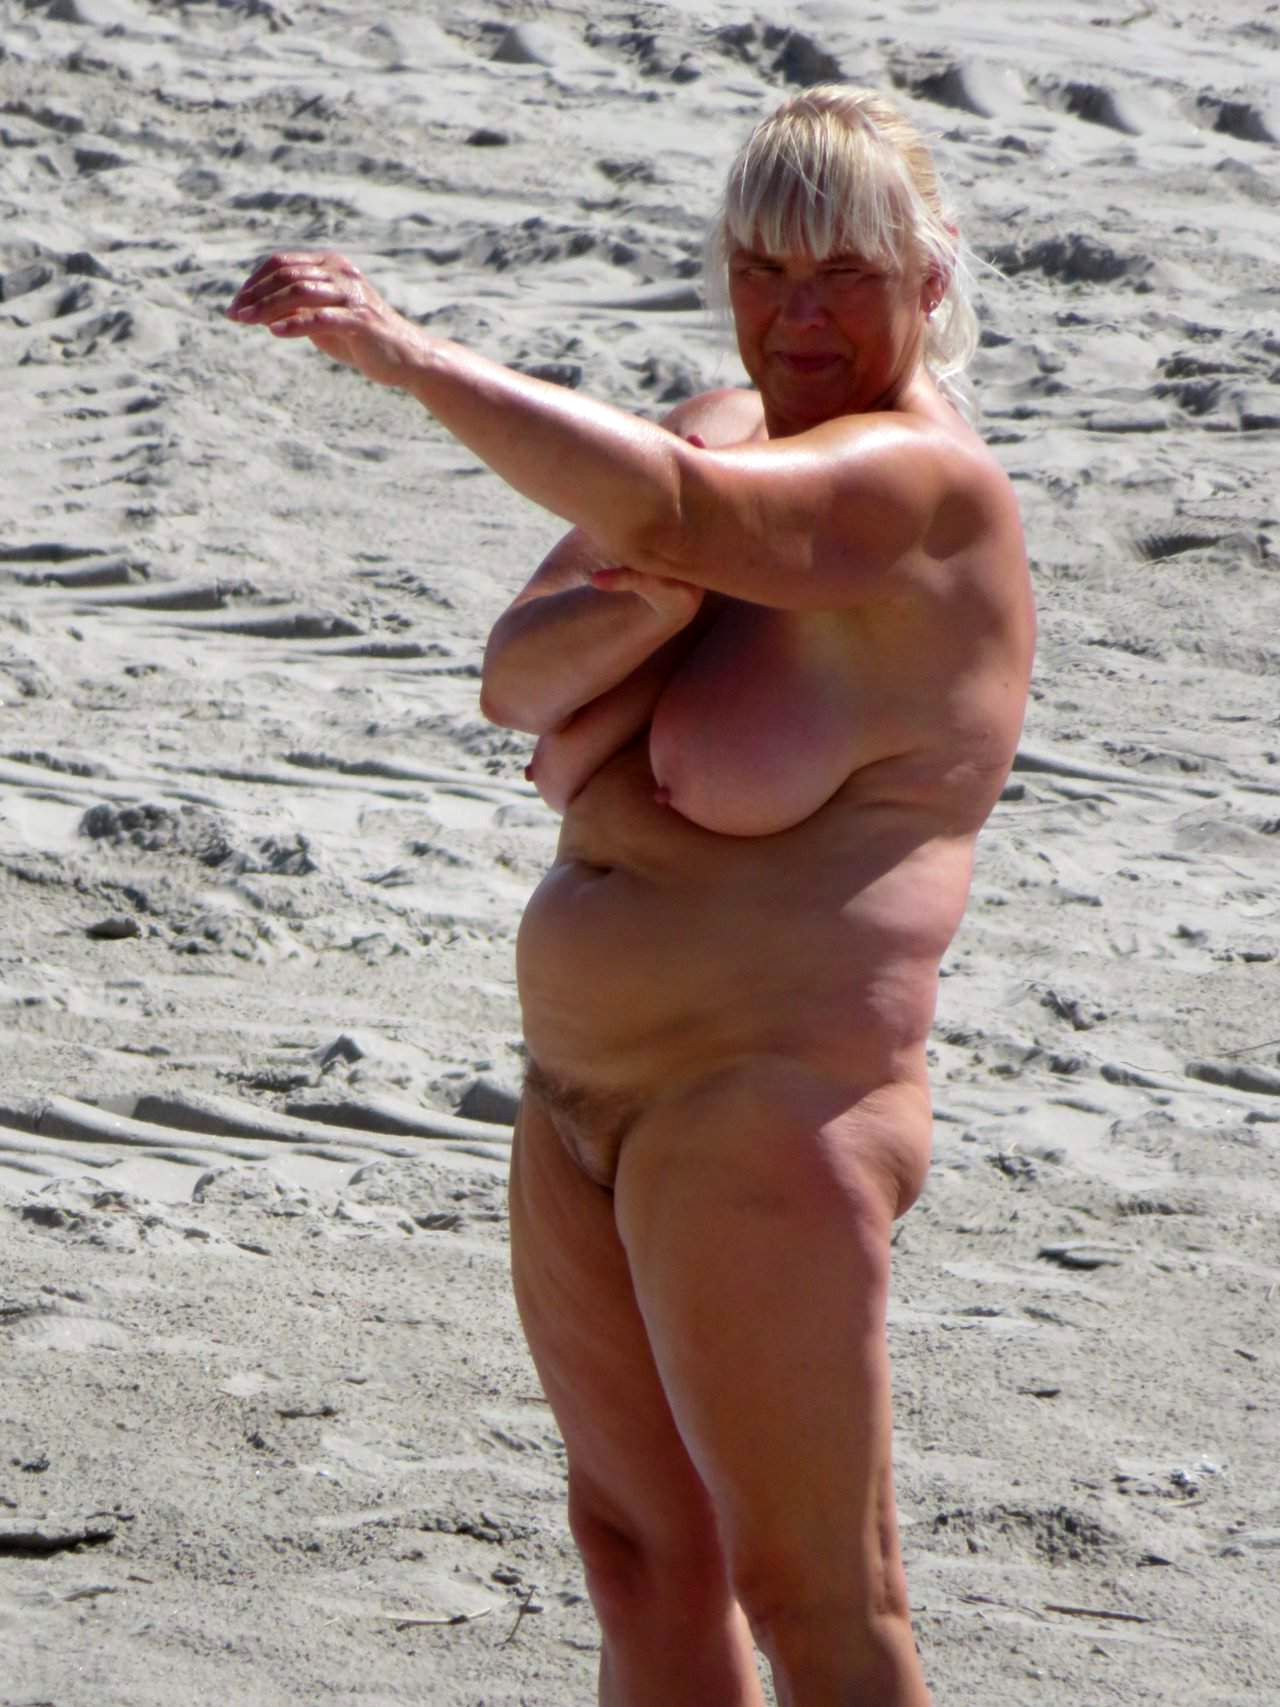 Granny nude beach homemade pics hq image